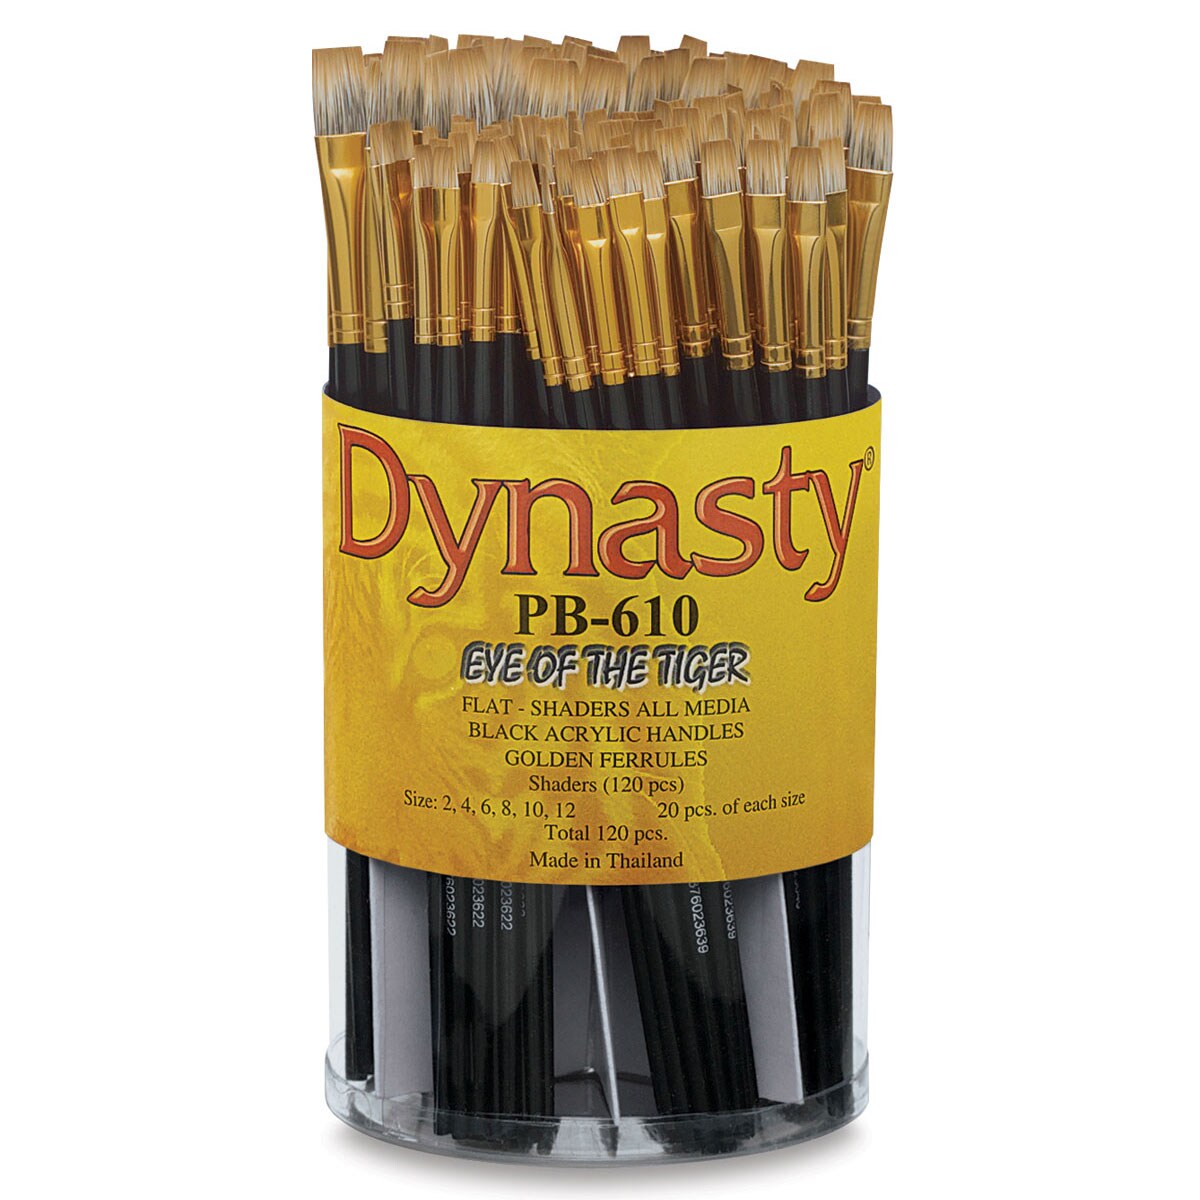 Dynasty Eye of the Tiger Brush Set - Shaders, Set of 96